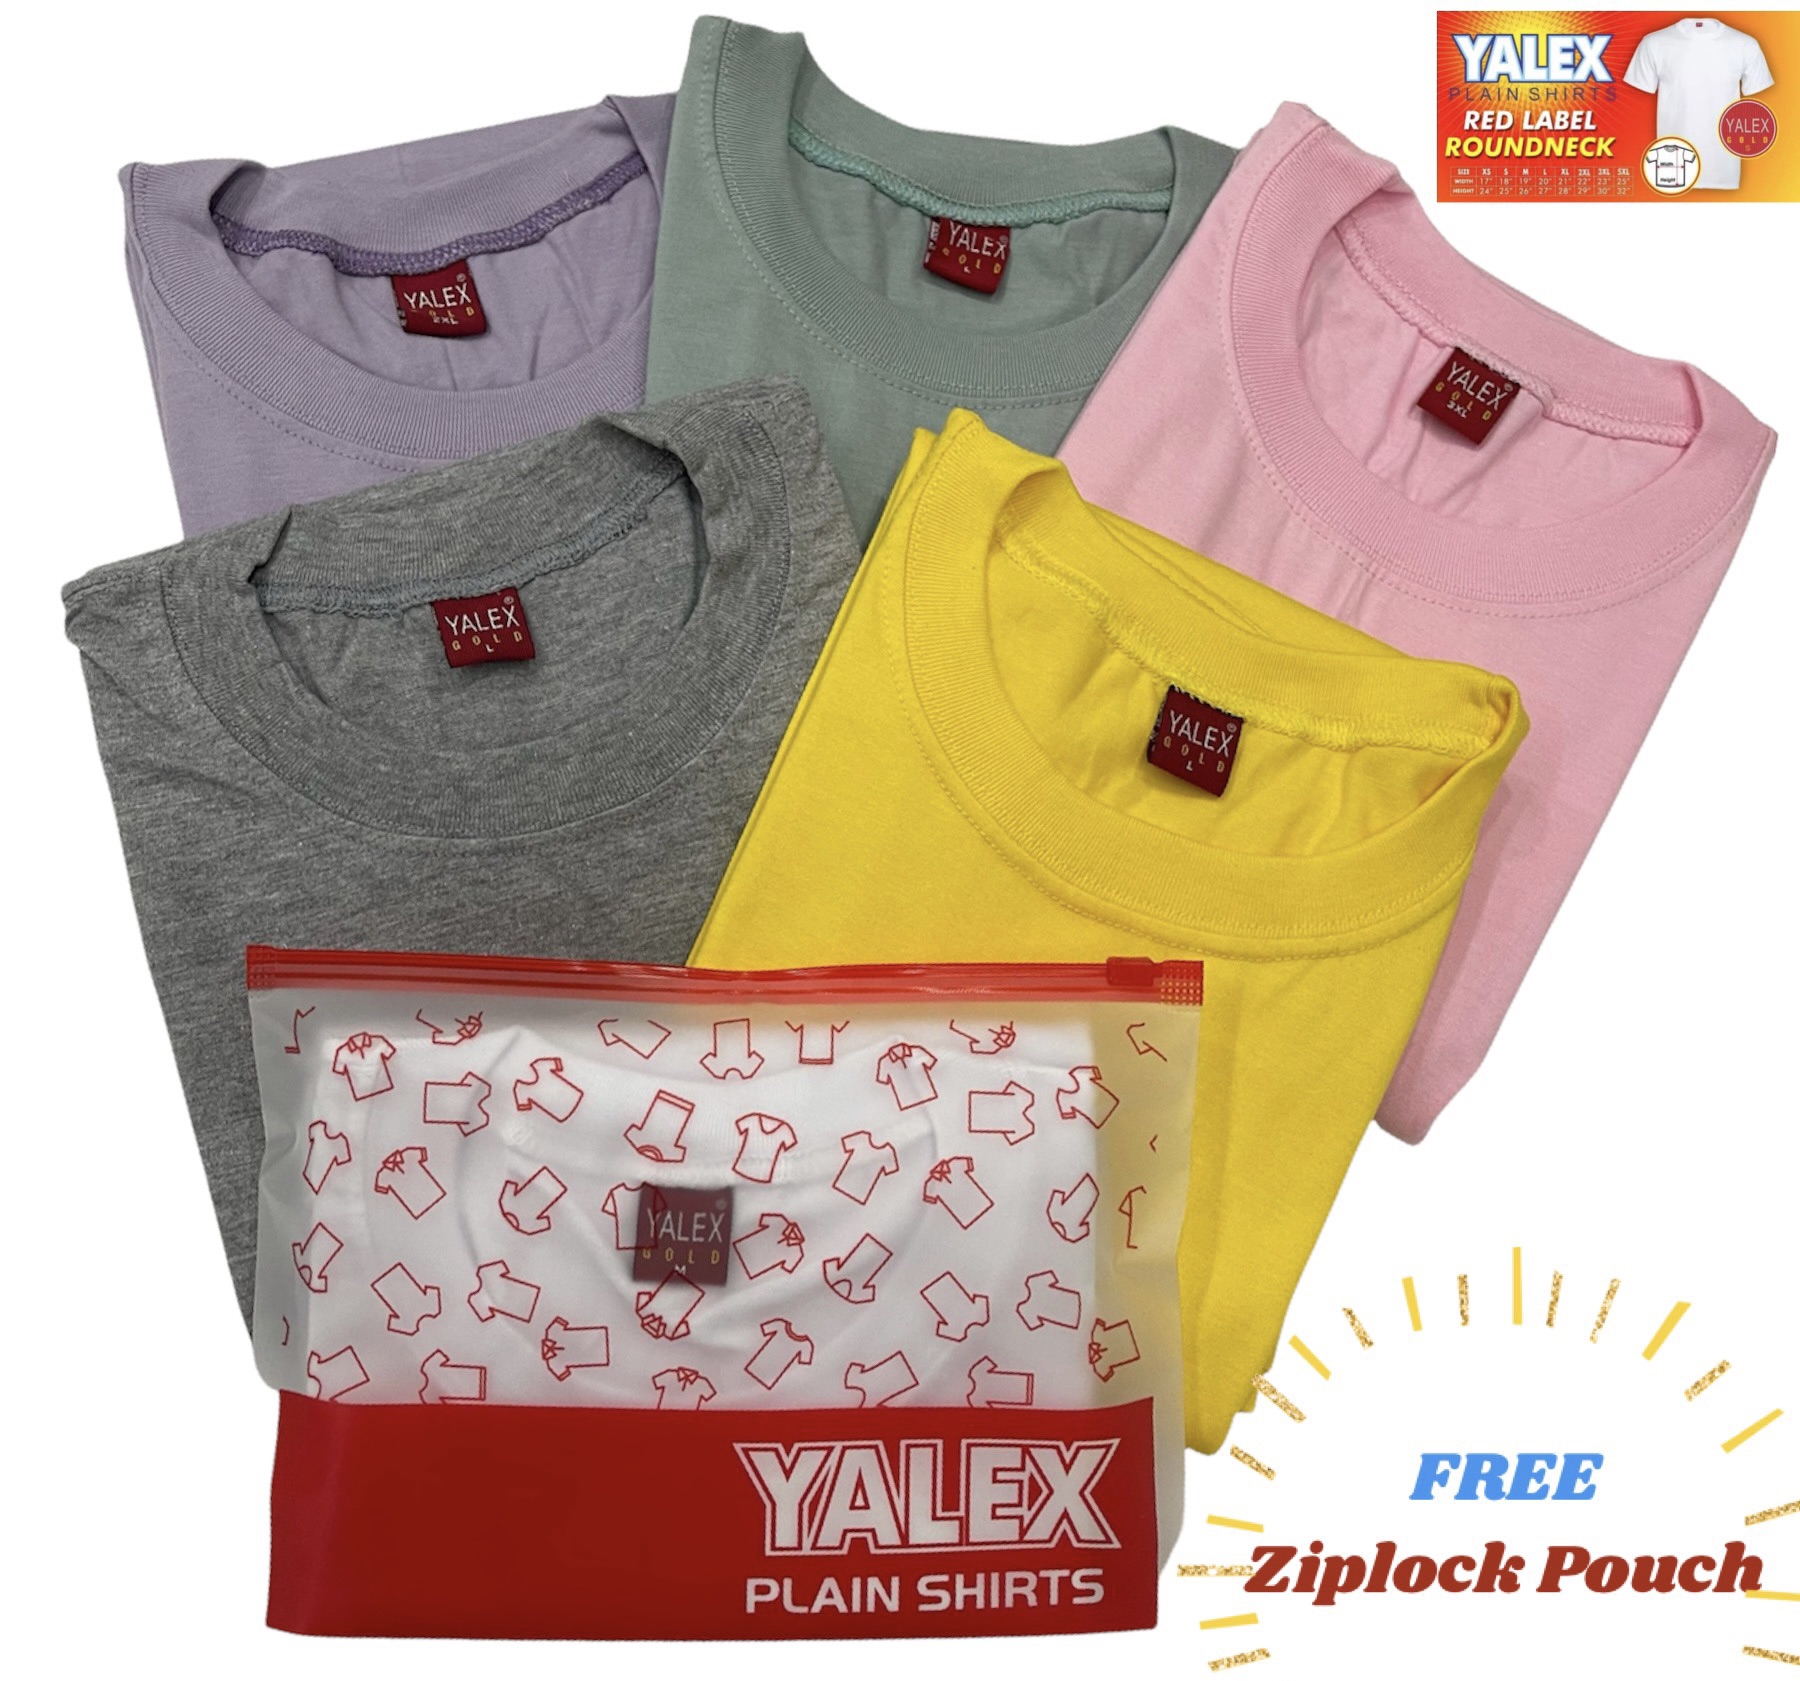 YALEX Red Label Unisex Round Neck Plain Shirts Light Colors